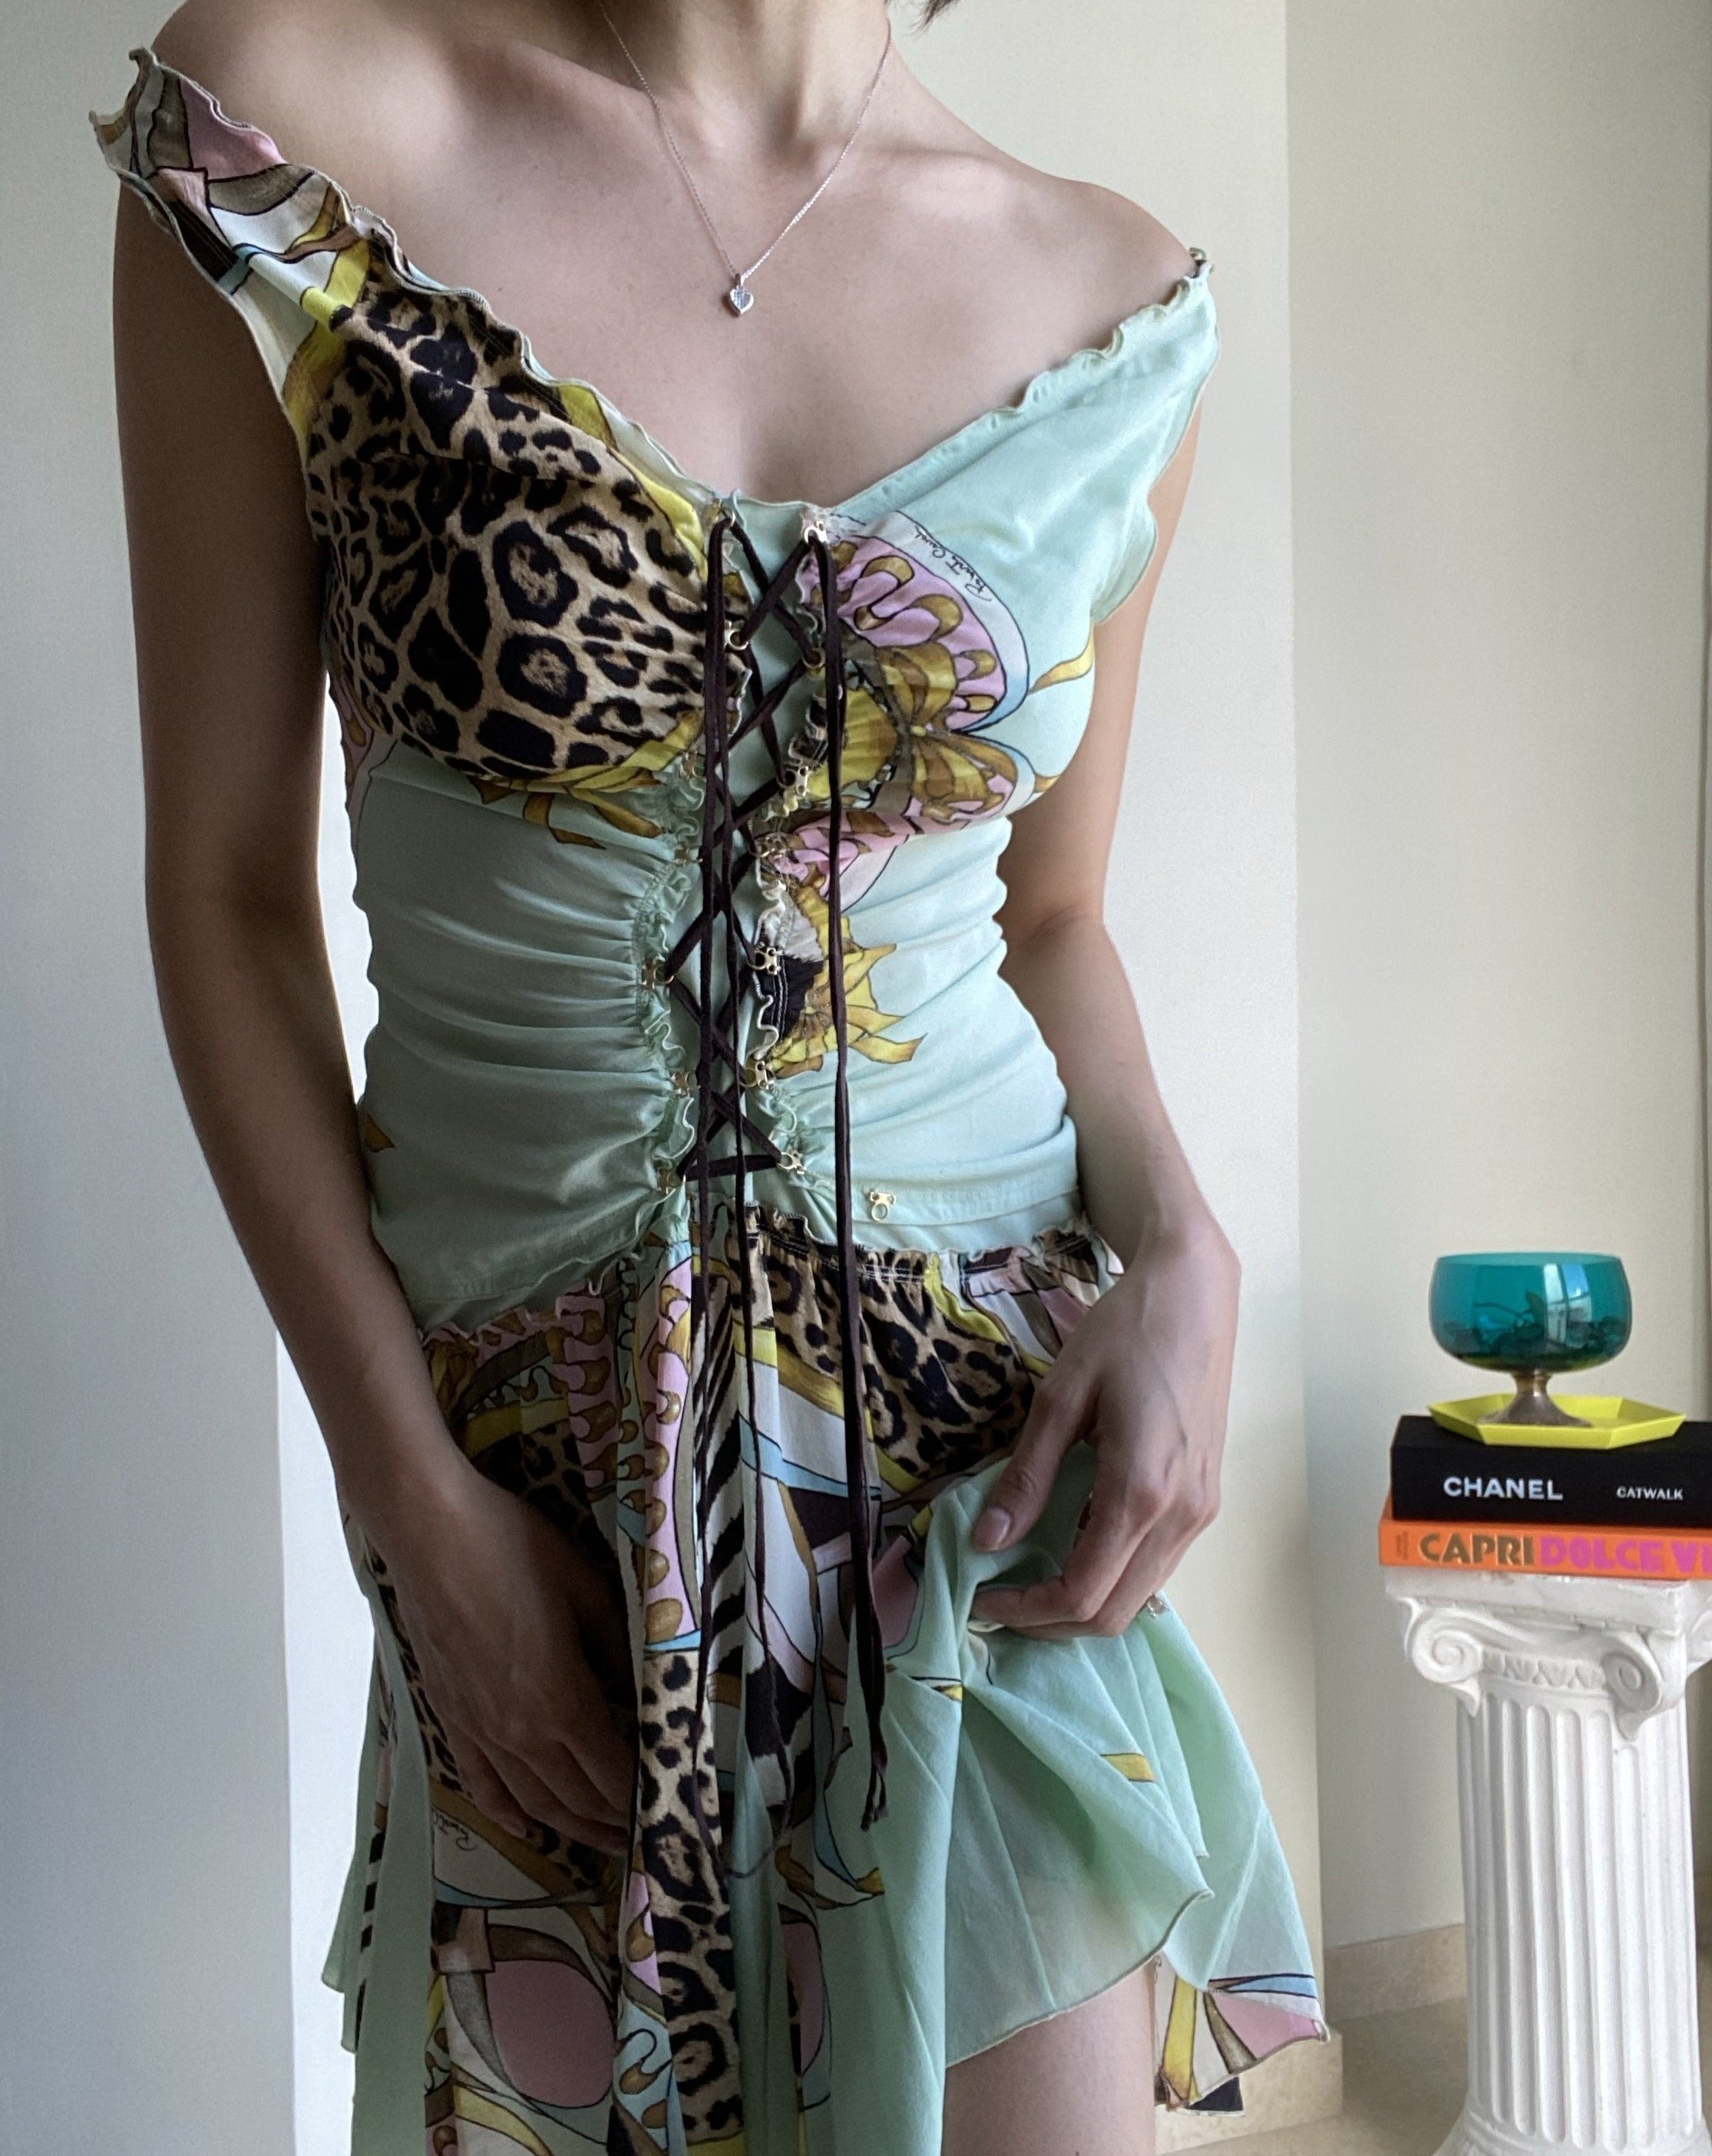 Roberto Cavalli Silk Animal Print Gold Accents Dress